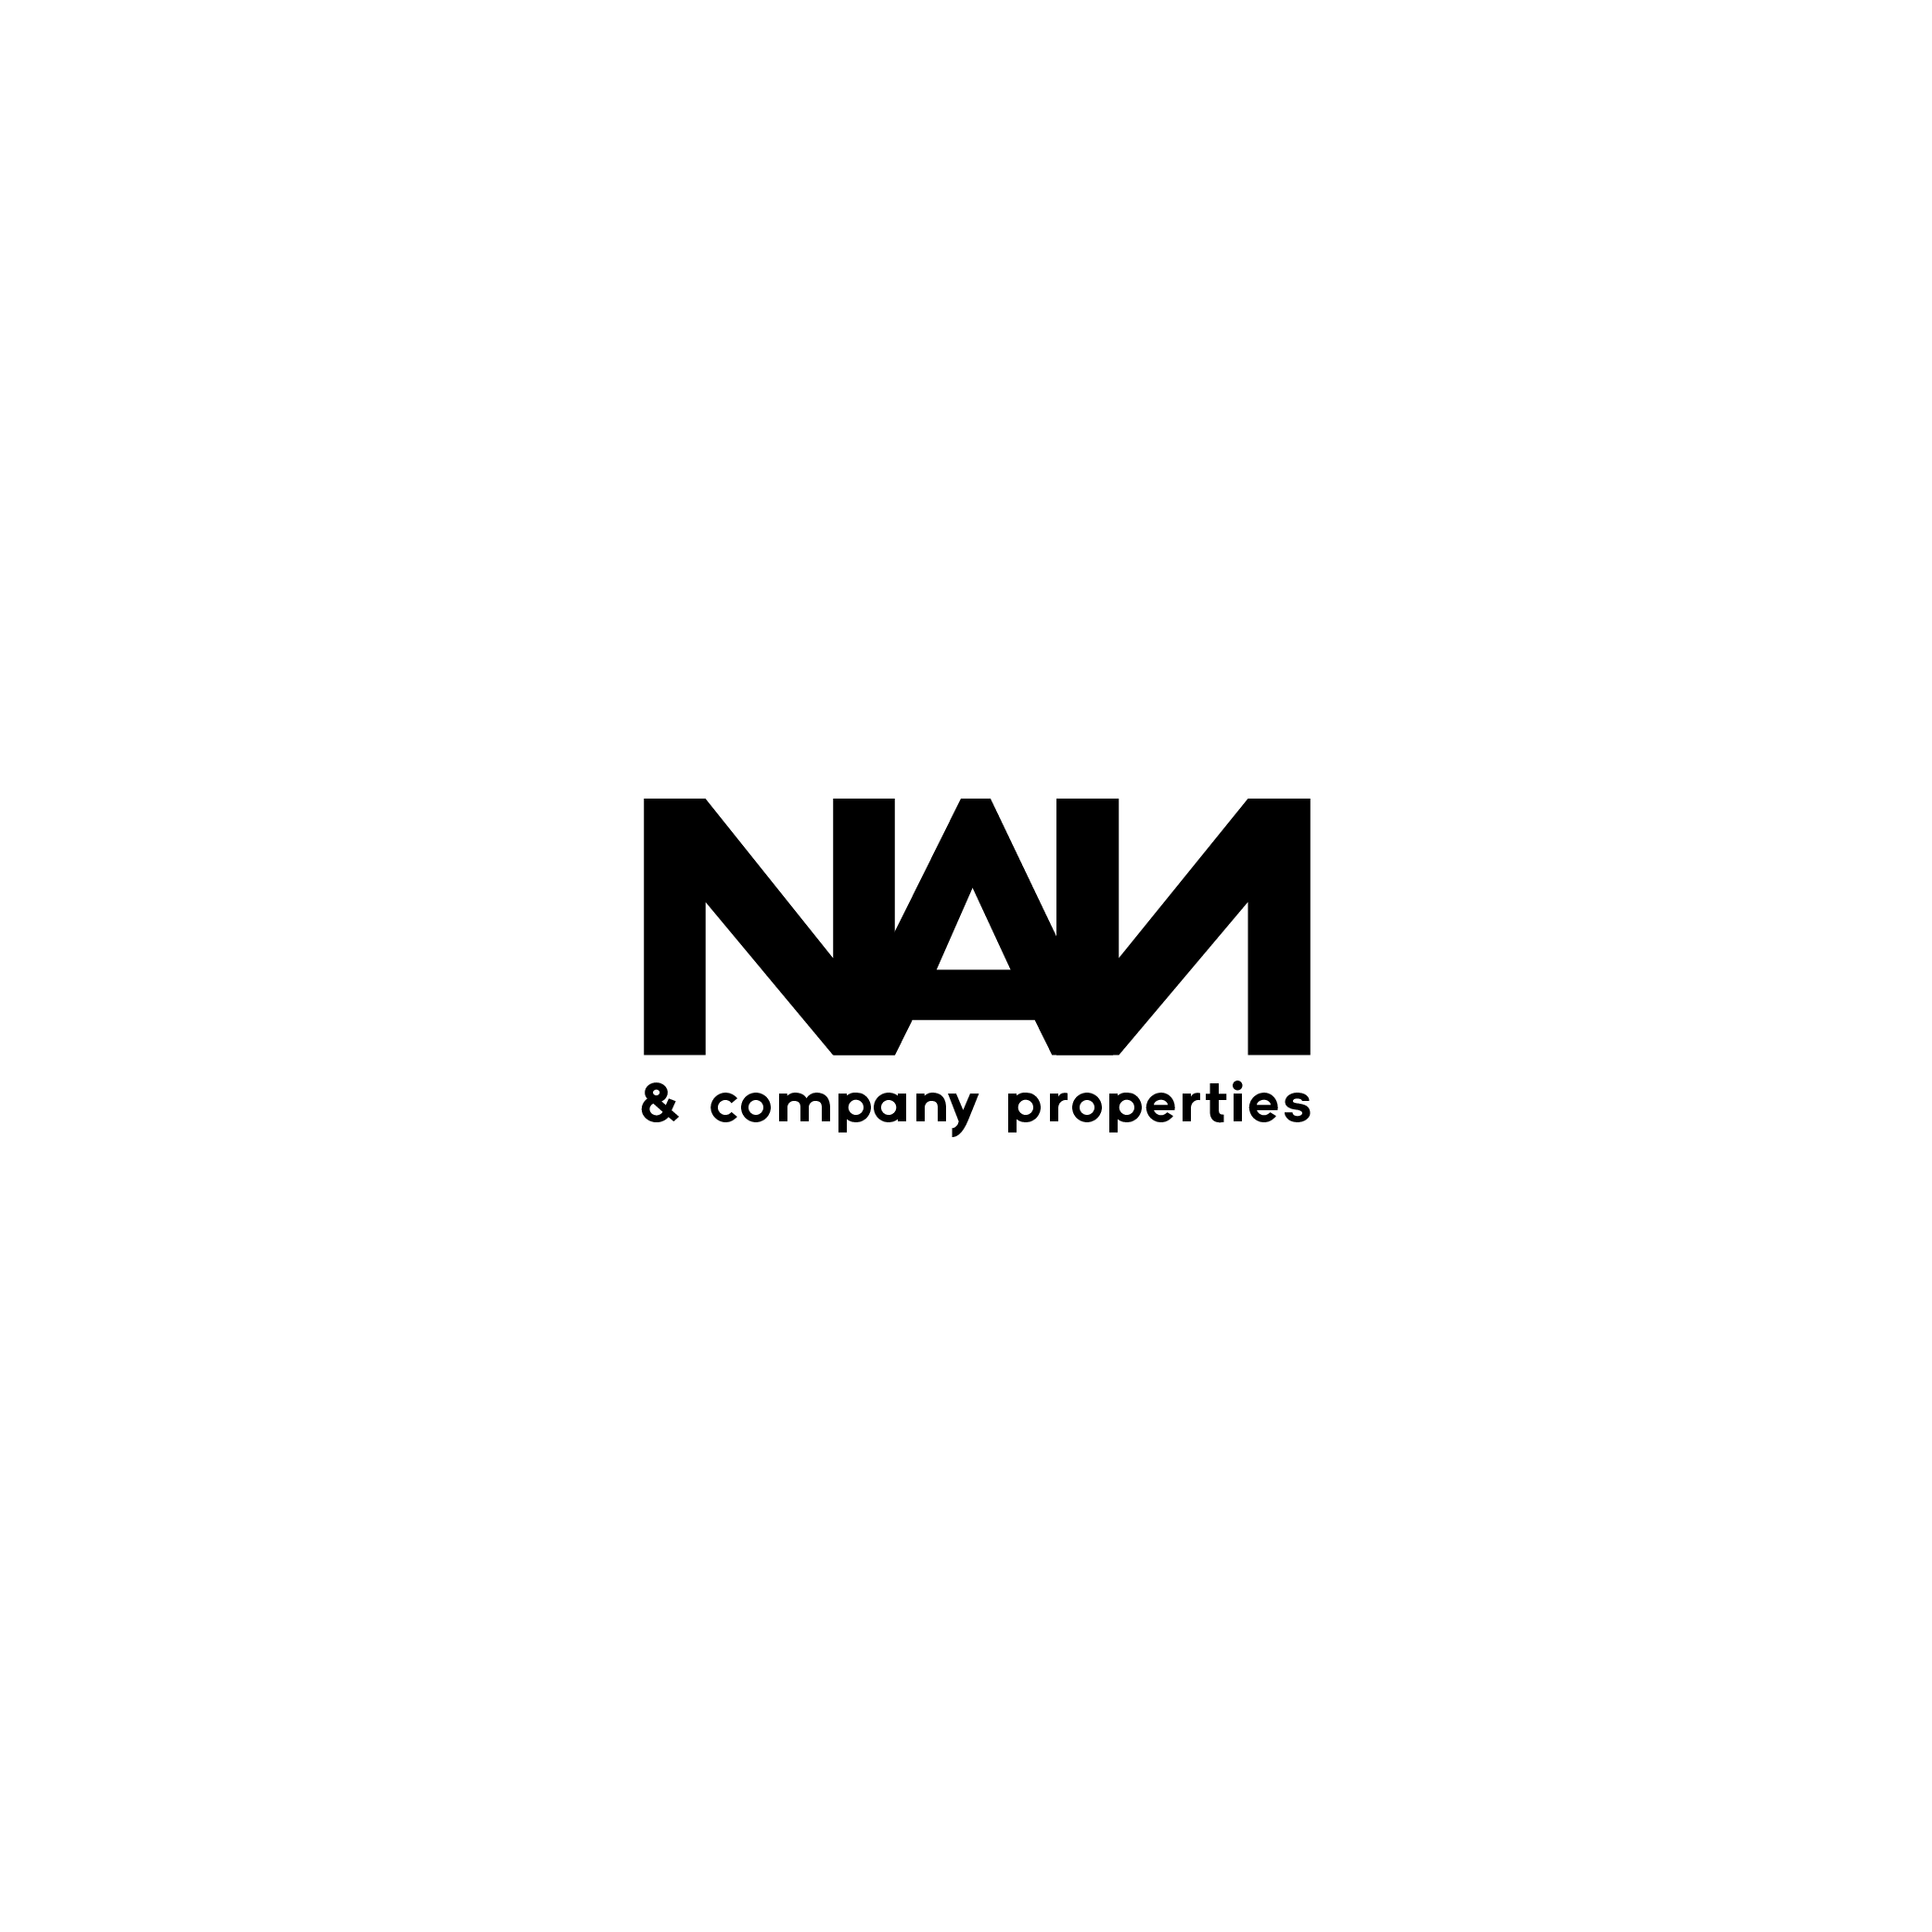 Nan Logo - DesignContest & Company Properties Nan Company Properties